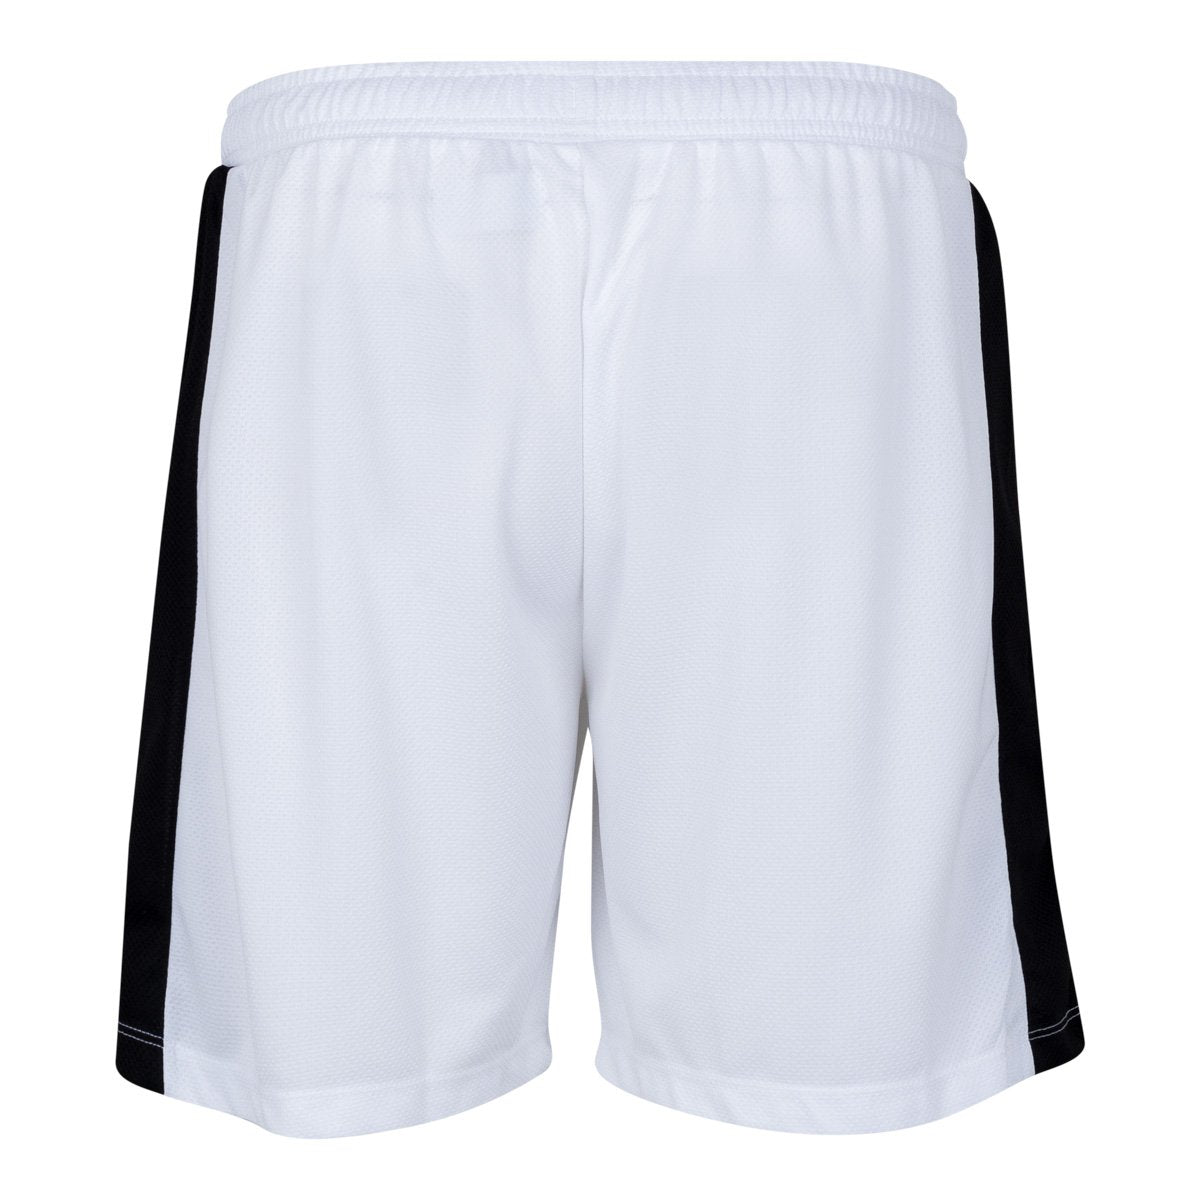 Pantalones cortes Basket Calusa Blanco Mujer - Imagen 2